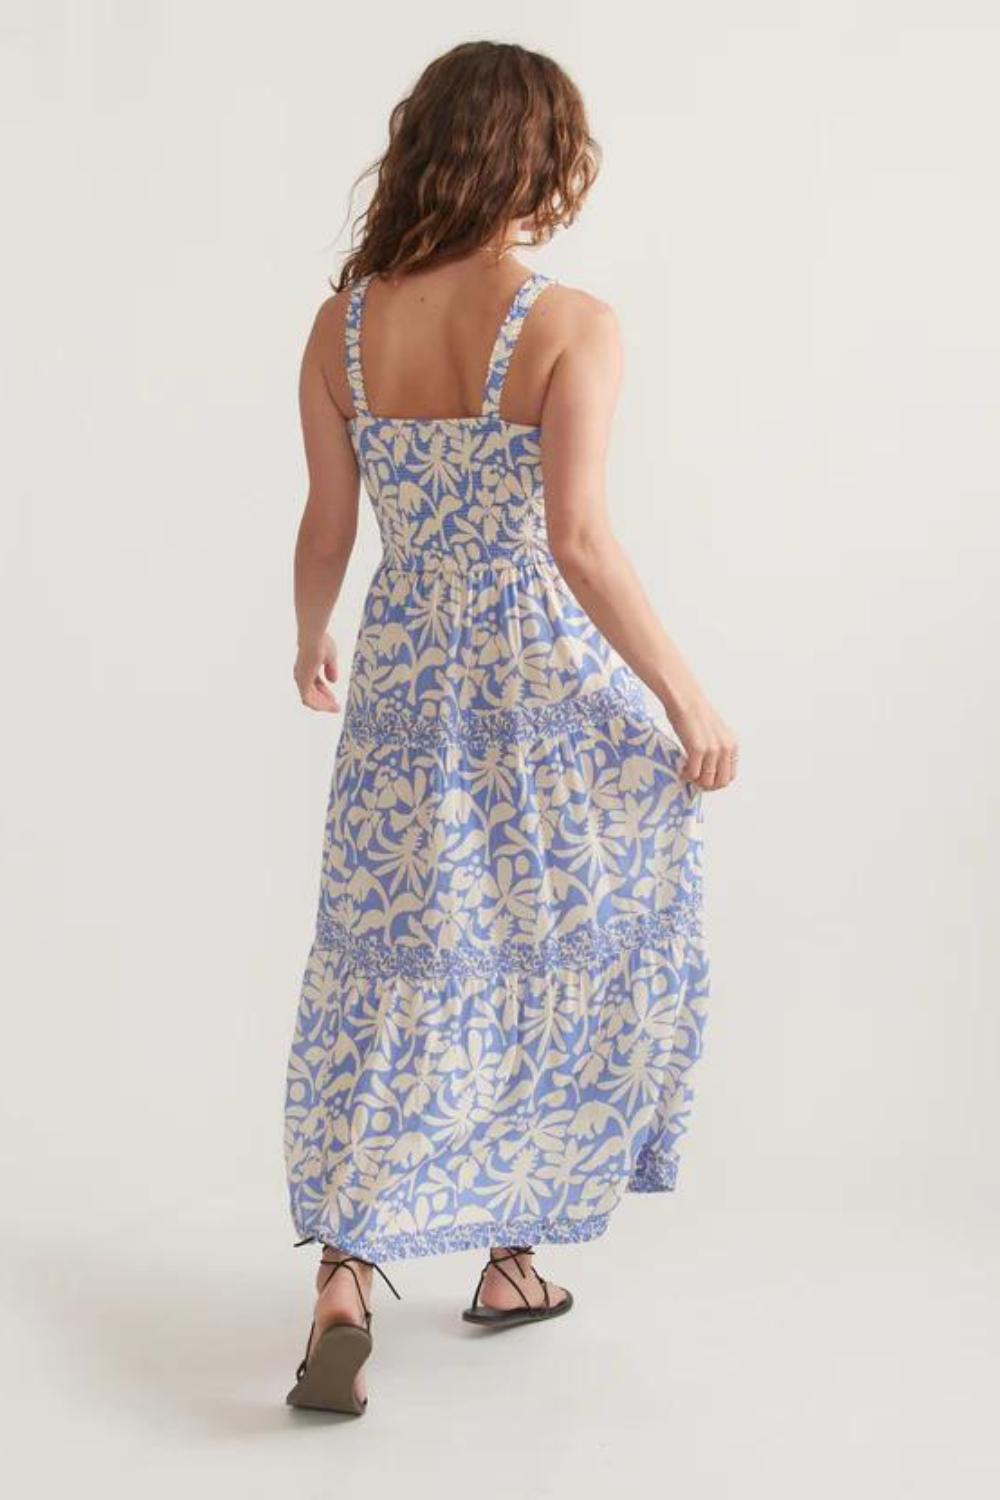 Marine Layer Print Mixing Selene Maxi Dress - Twilight Blue Flora